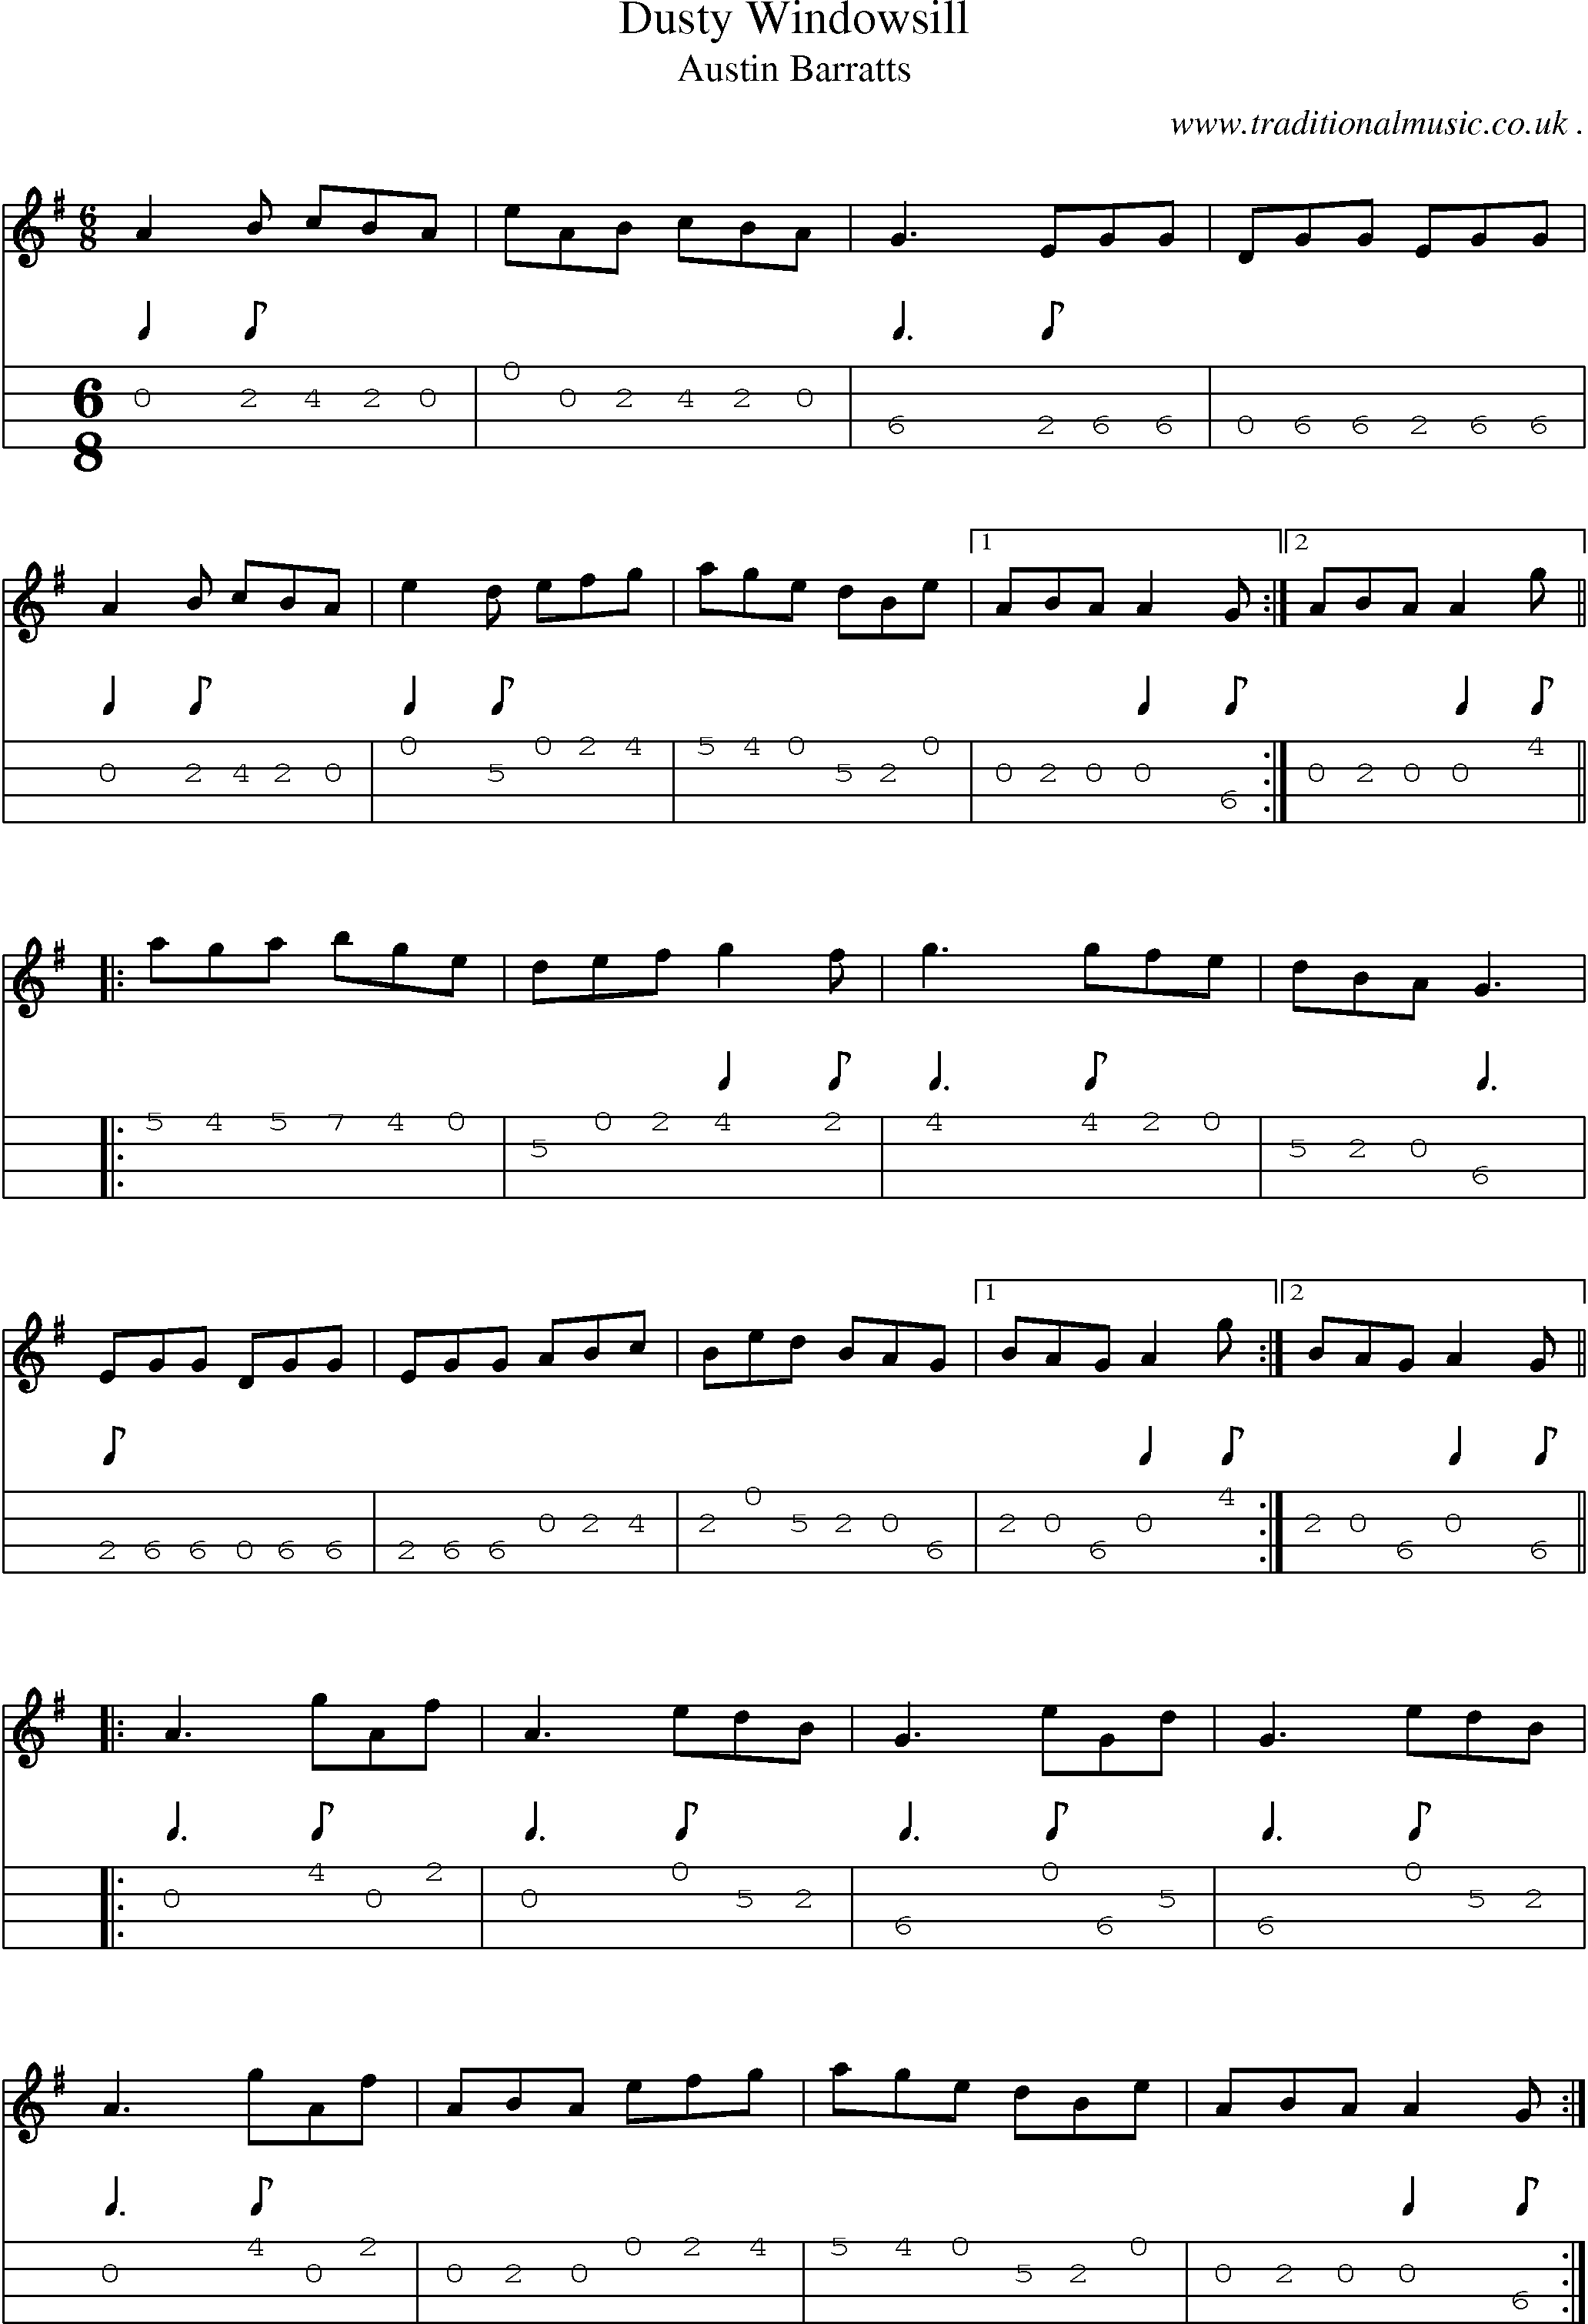 Sheet-Music and Mandolin Tabs for Dusty Windowsill